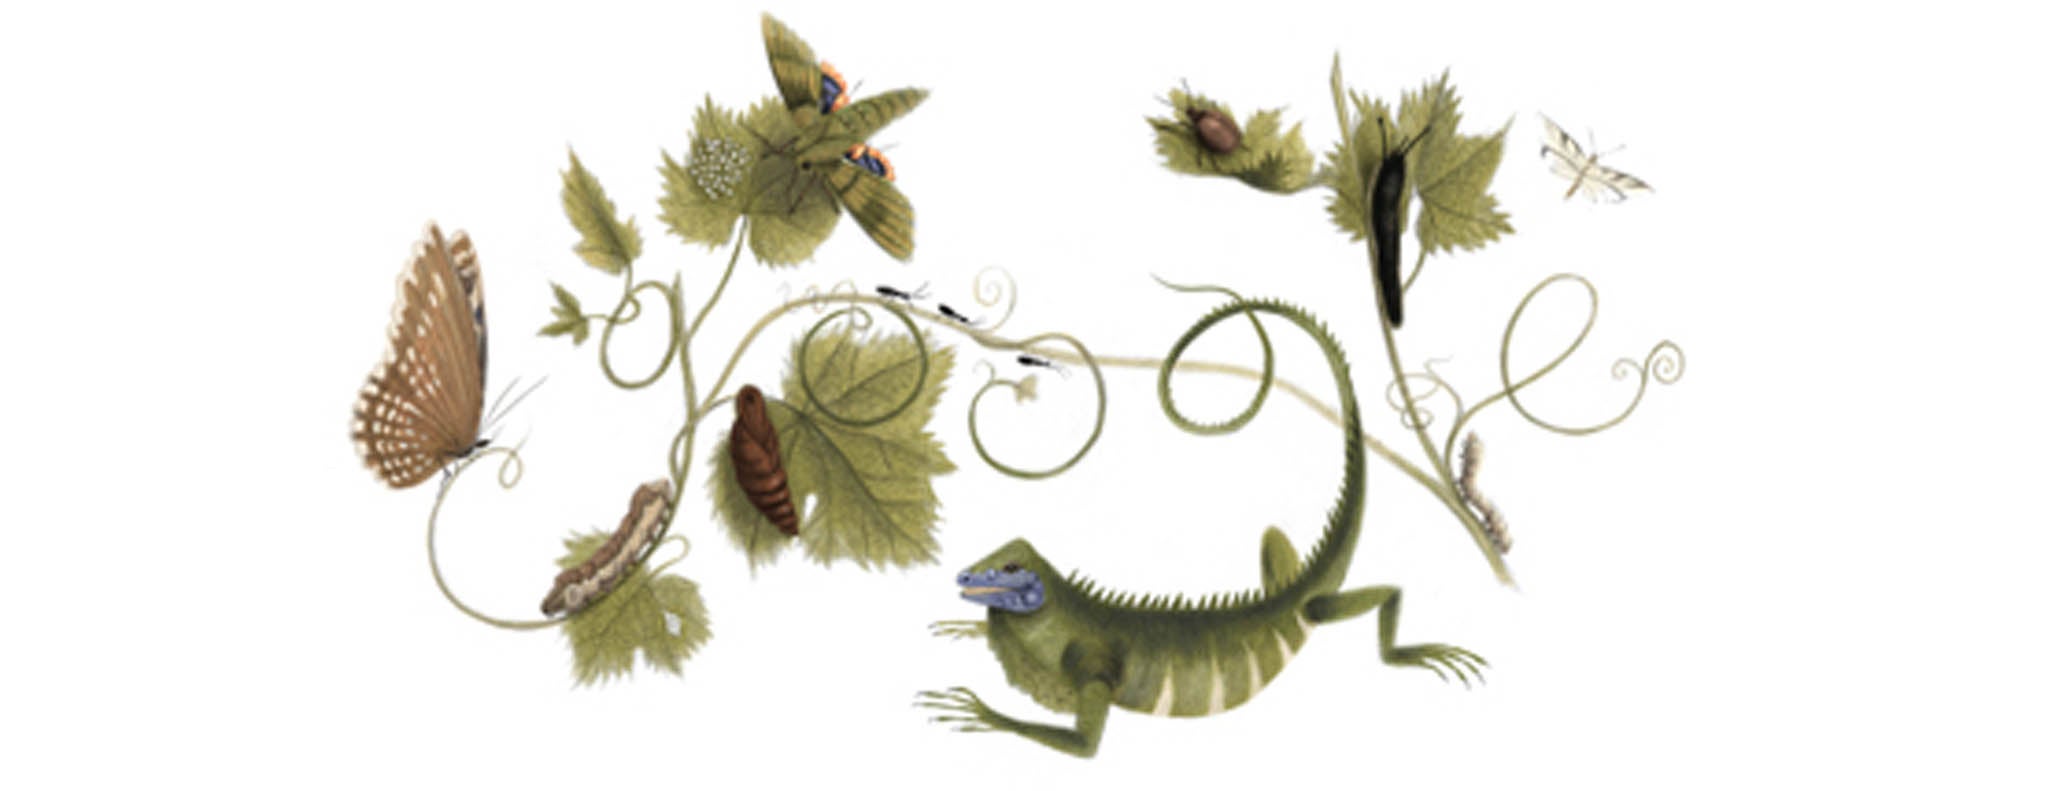 The Google doodle marks the 366th birthday of Maria Sibylla Merians